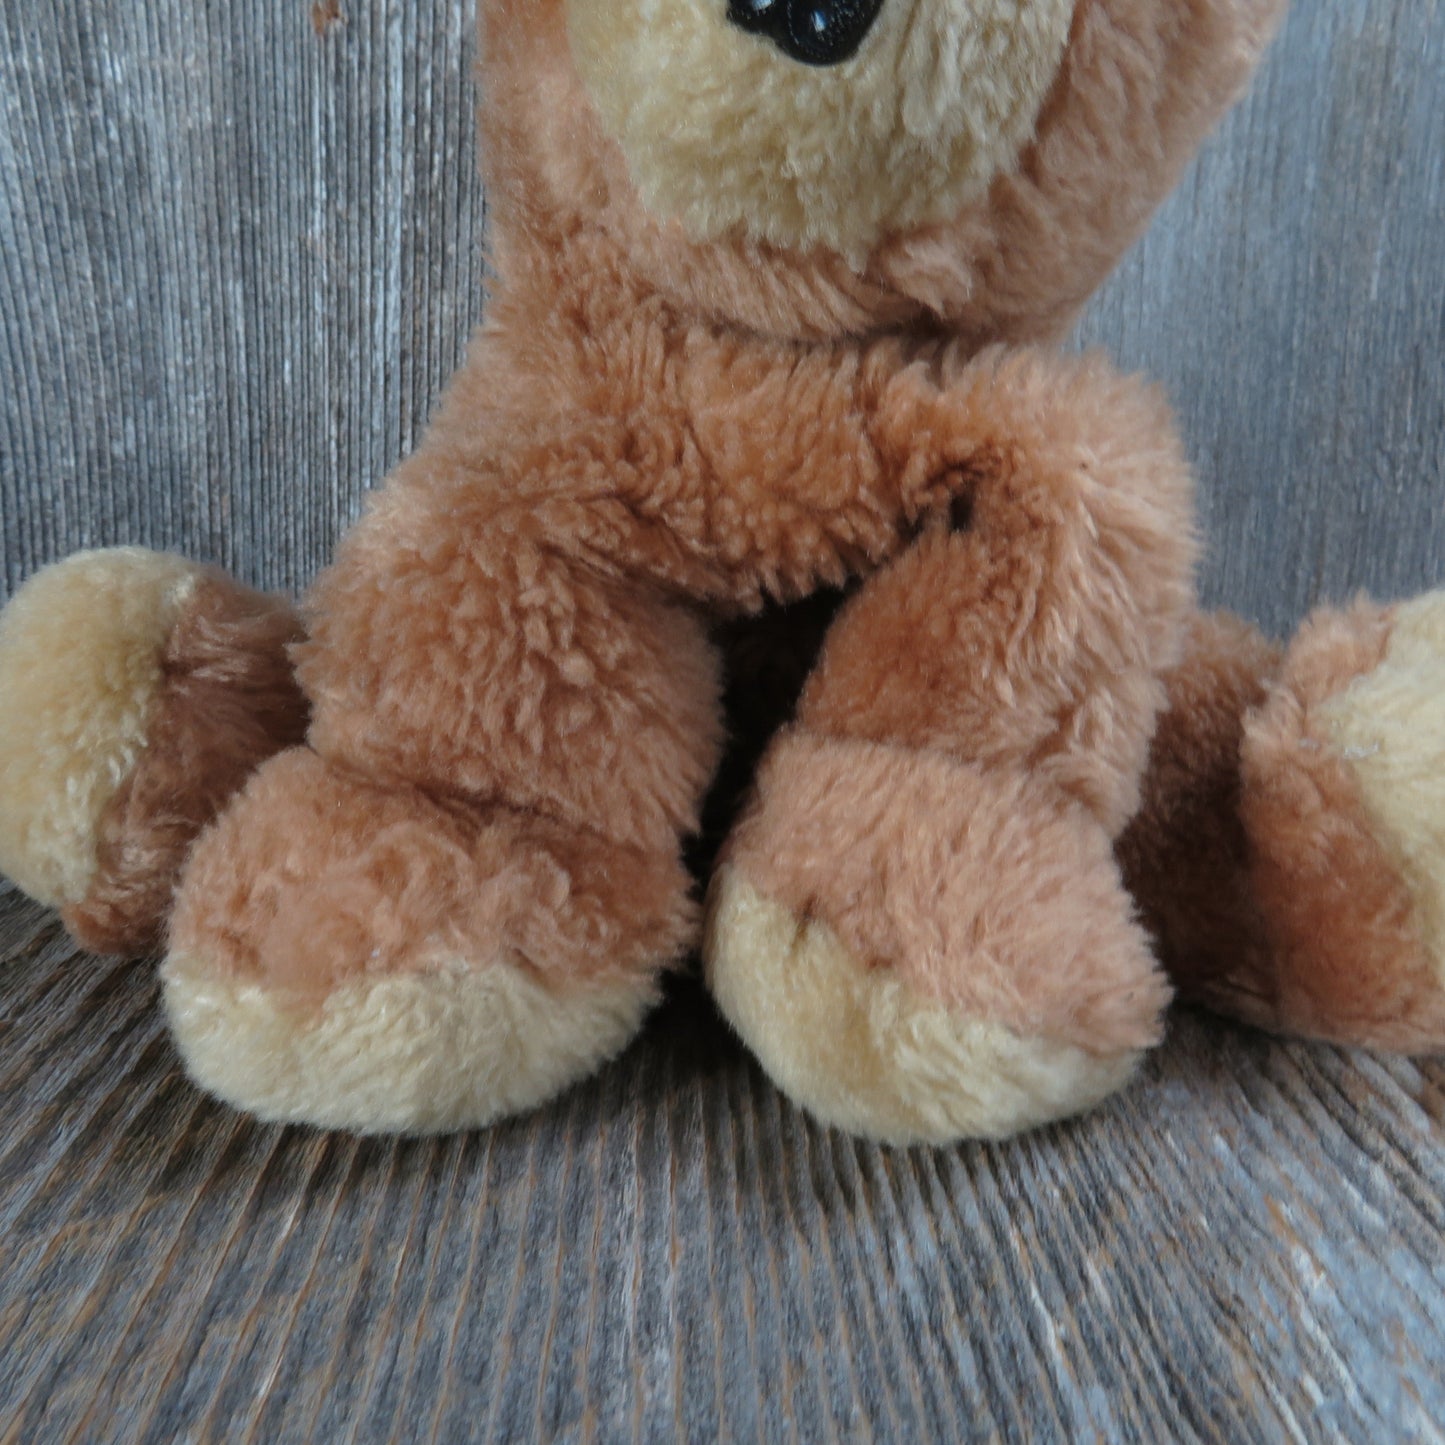 Vintage Teddy Bear Plush Dakin Baby Bearfoot 1976 Plush Stuffed Animal Nut Filled Bear Foot